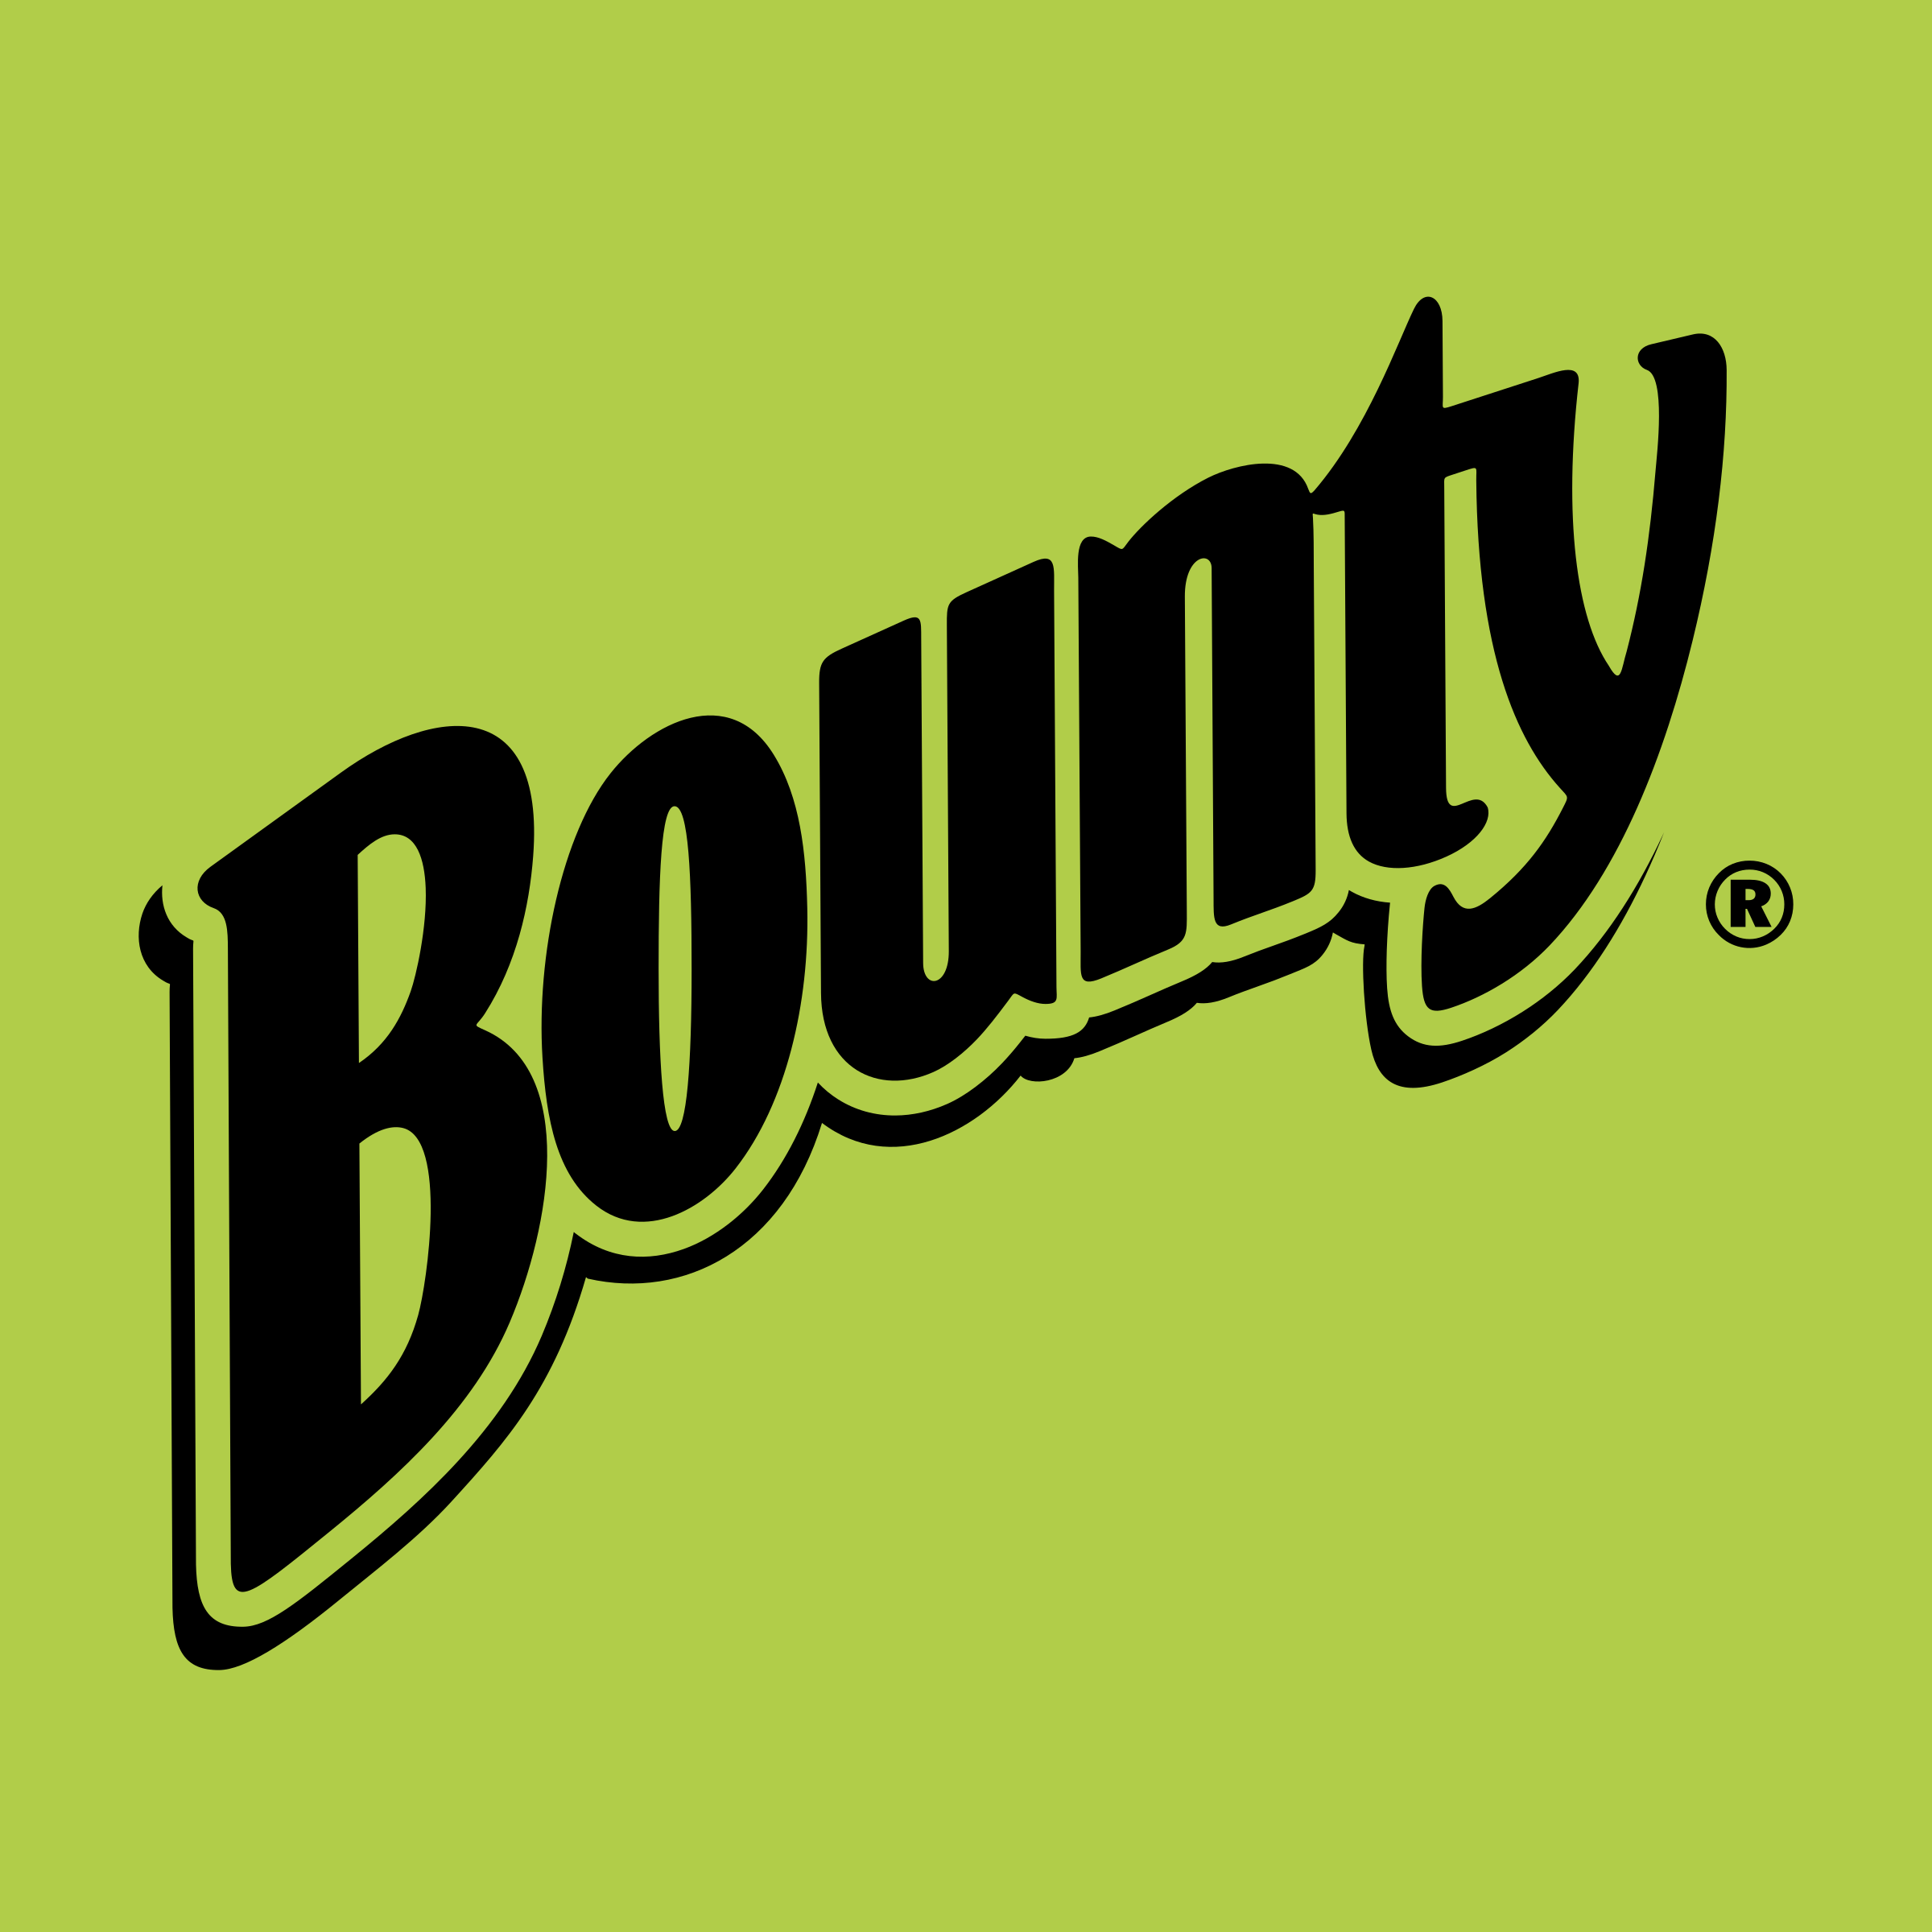 Bounty Logo - Bounty Logo PNG Transparent & SVG Vector - Freebie Supply